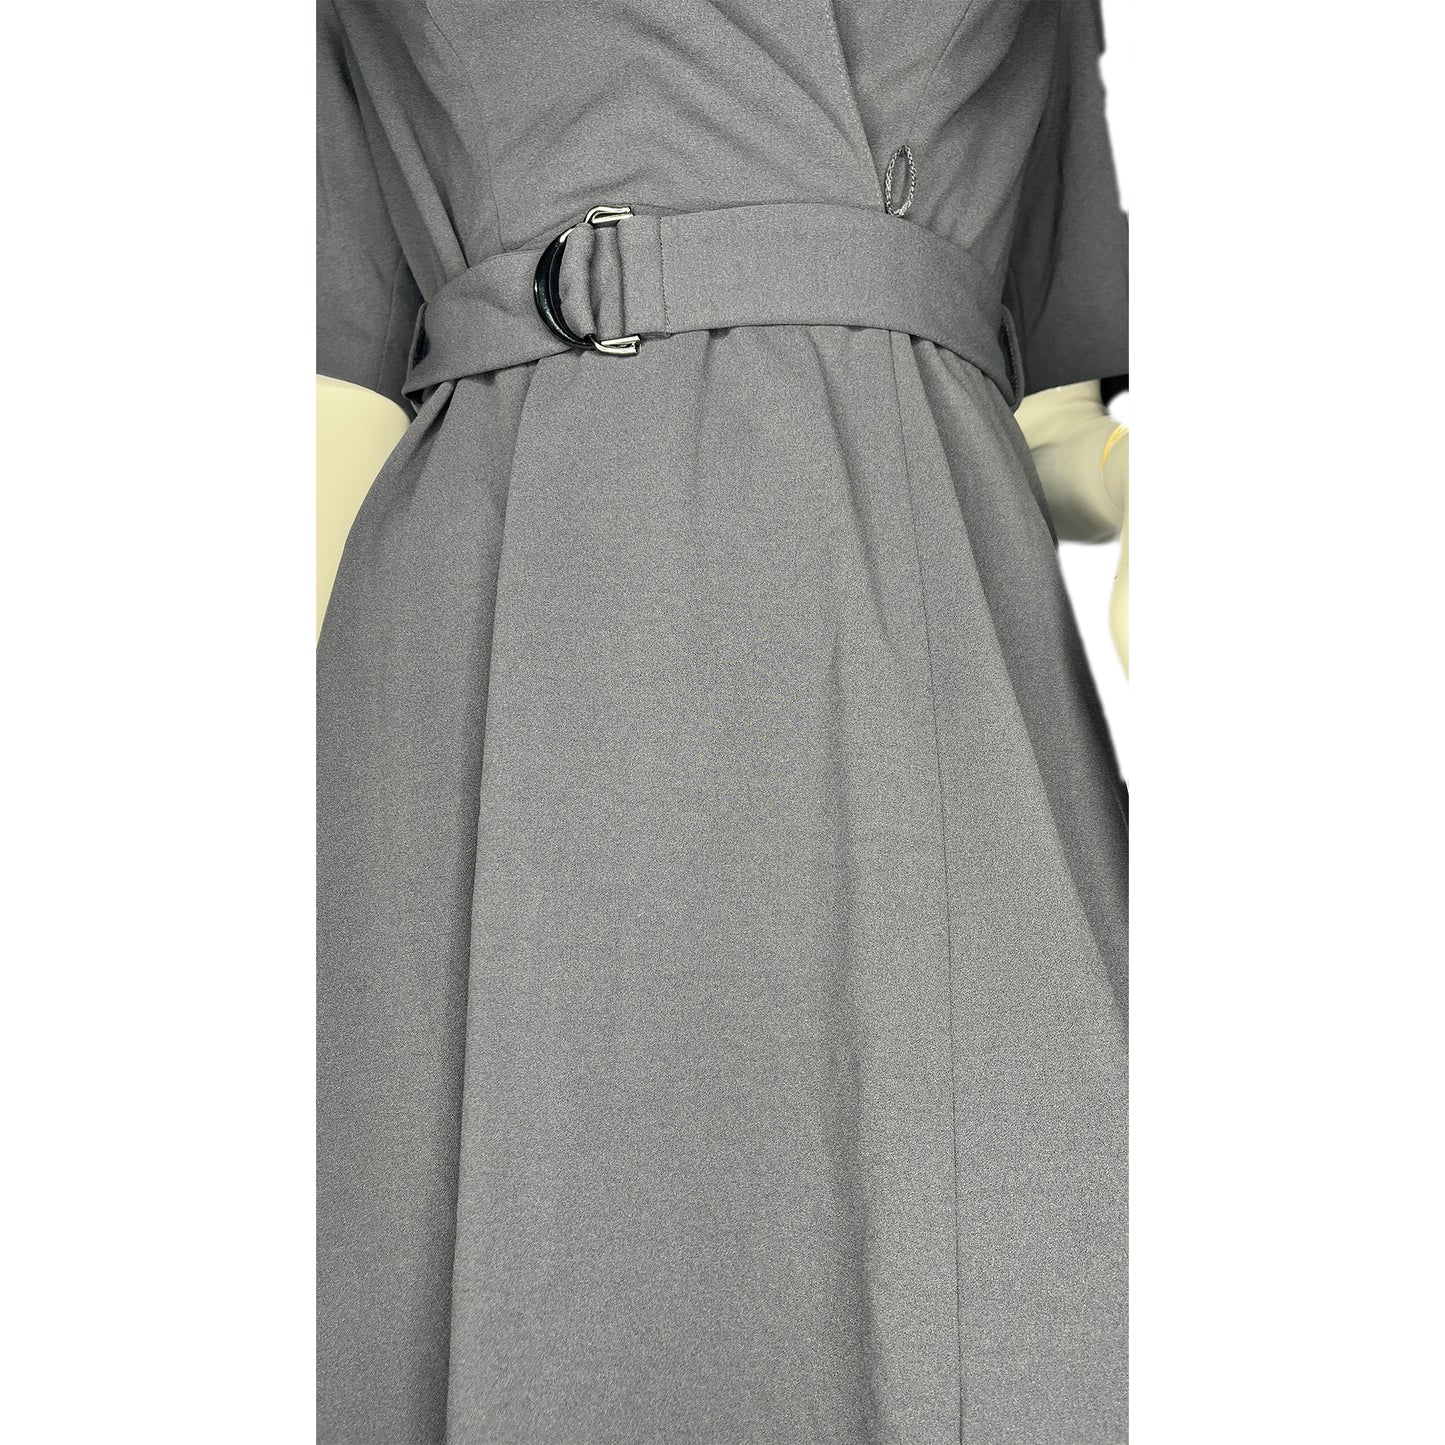 Calvin Klein Dress Short Sleeves w/ Belt Gray Size 8 SKU 000078-5